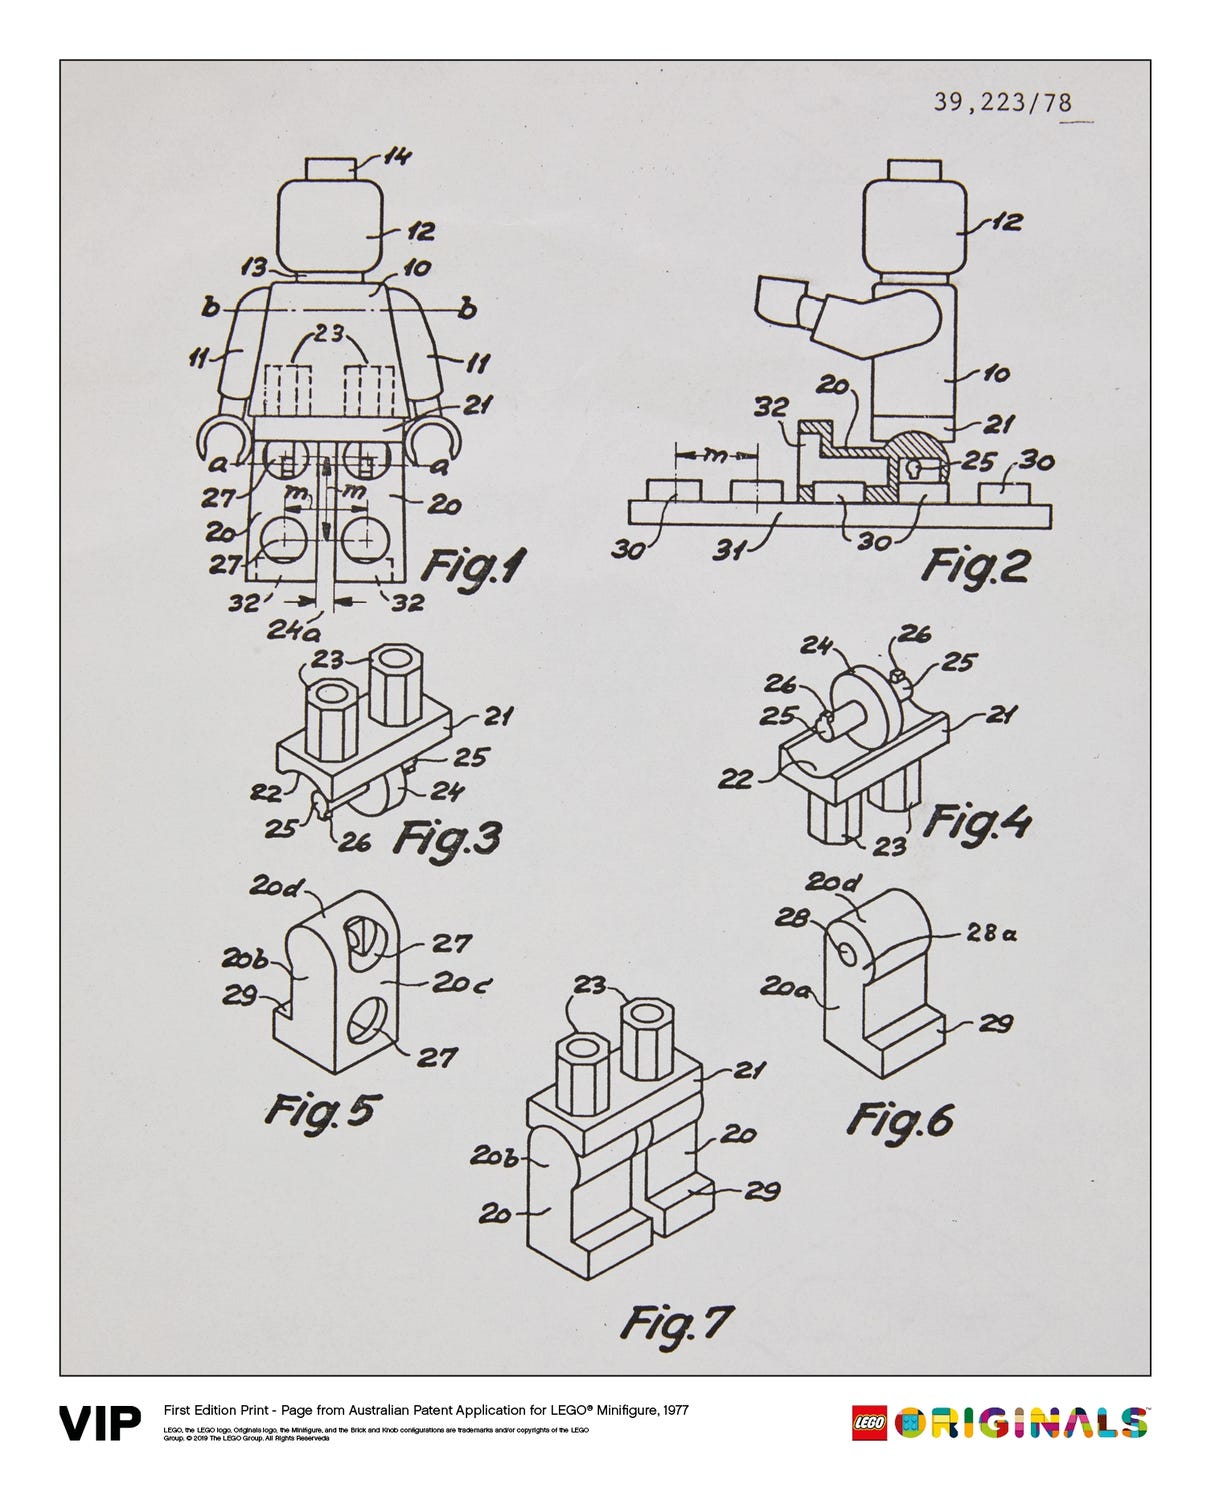 Australian Patent LEGO Miniﬁgure 1977